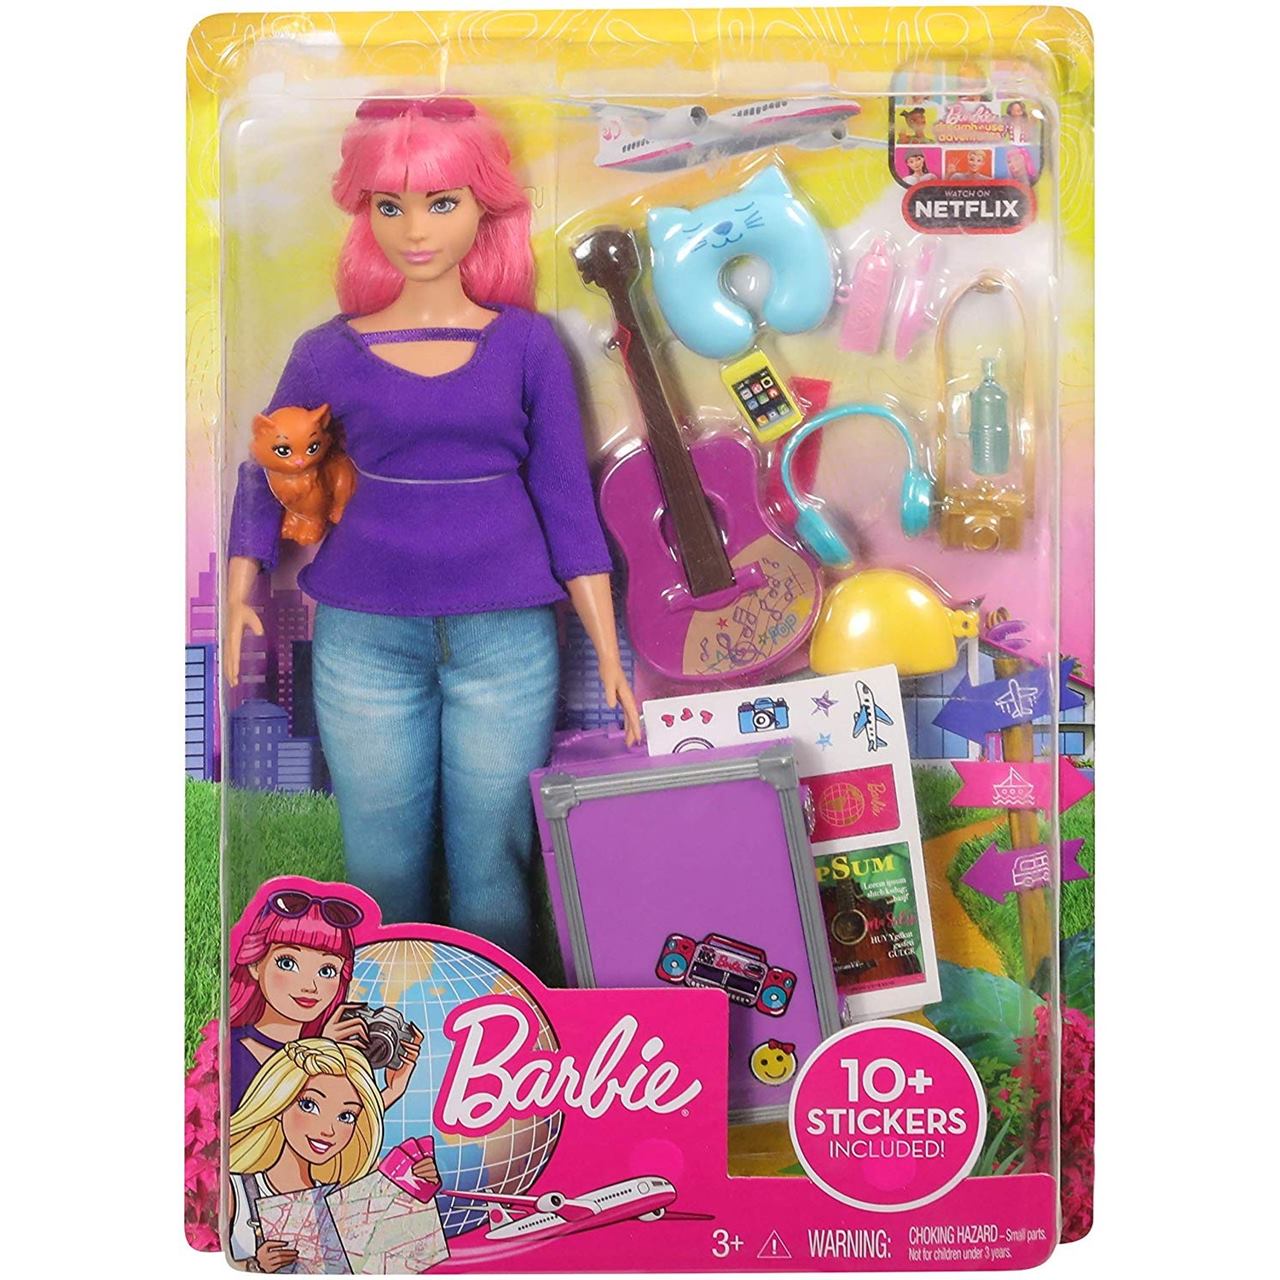 barbie travel puppe